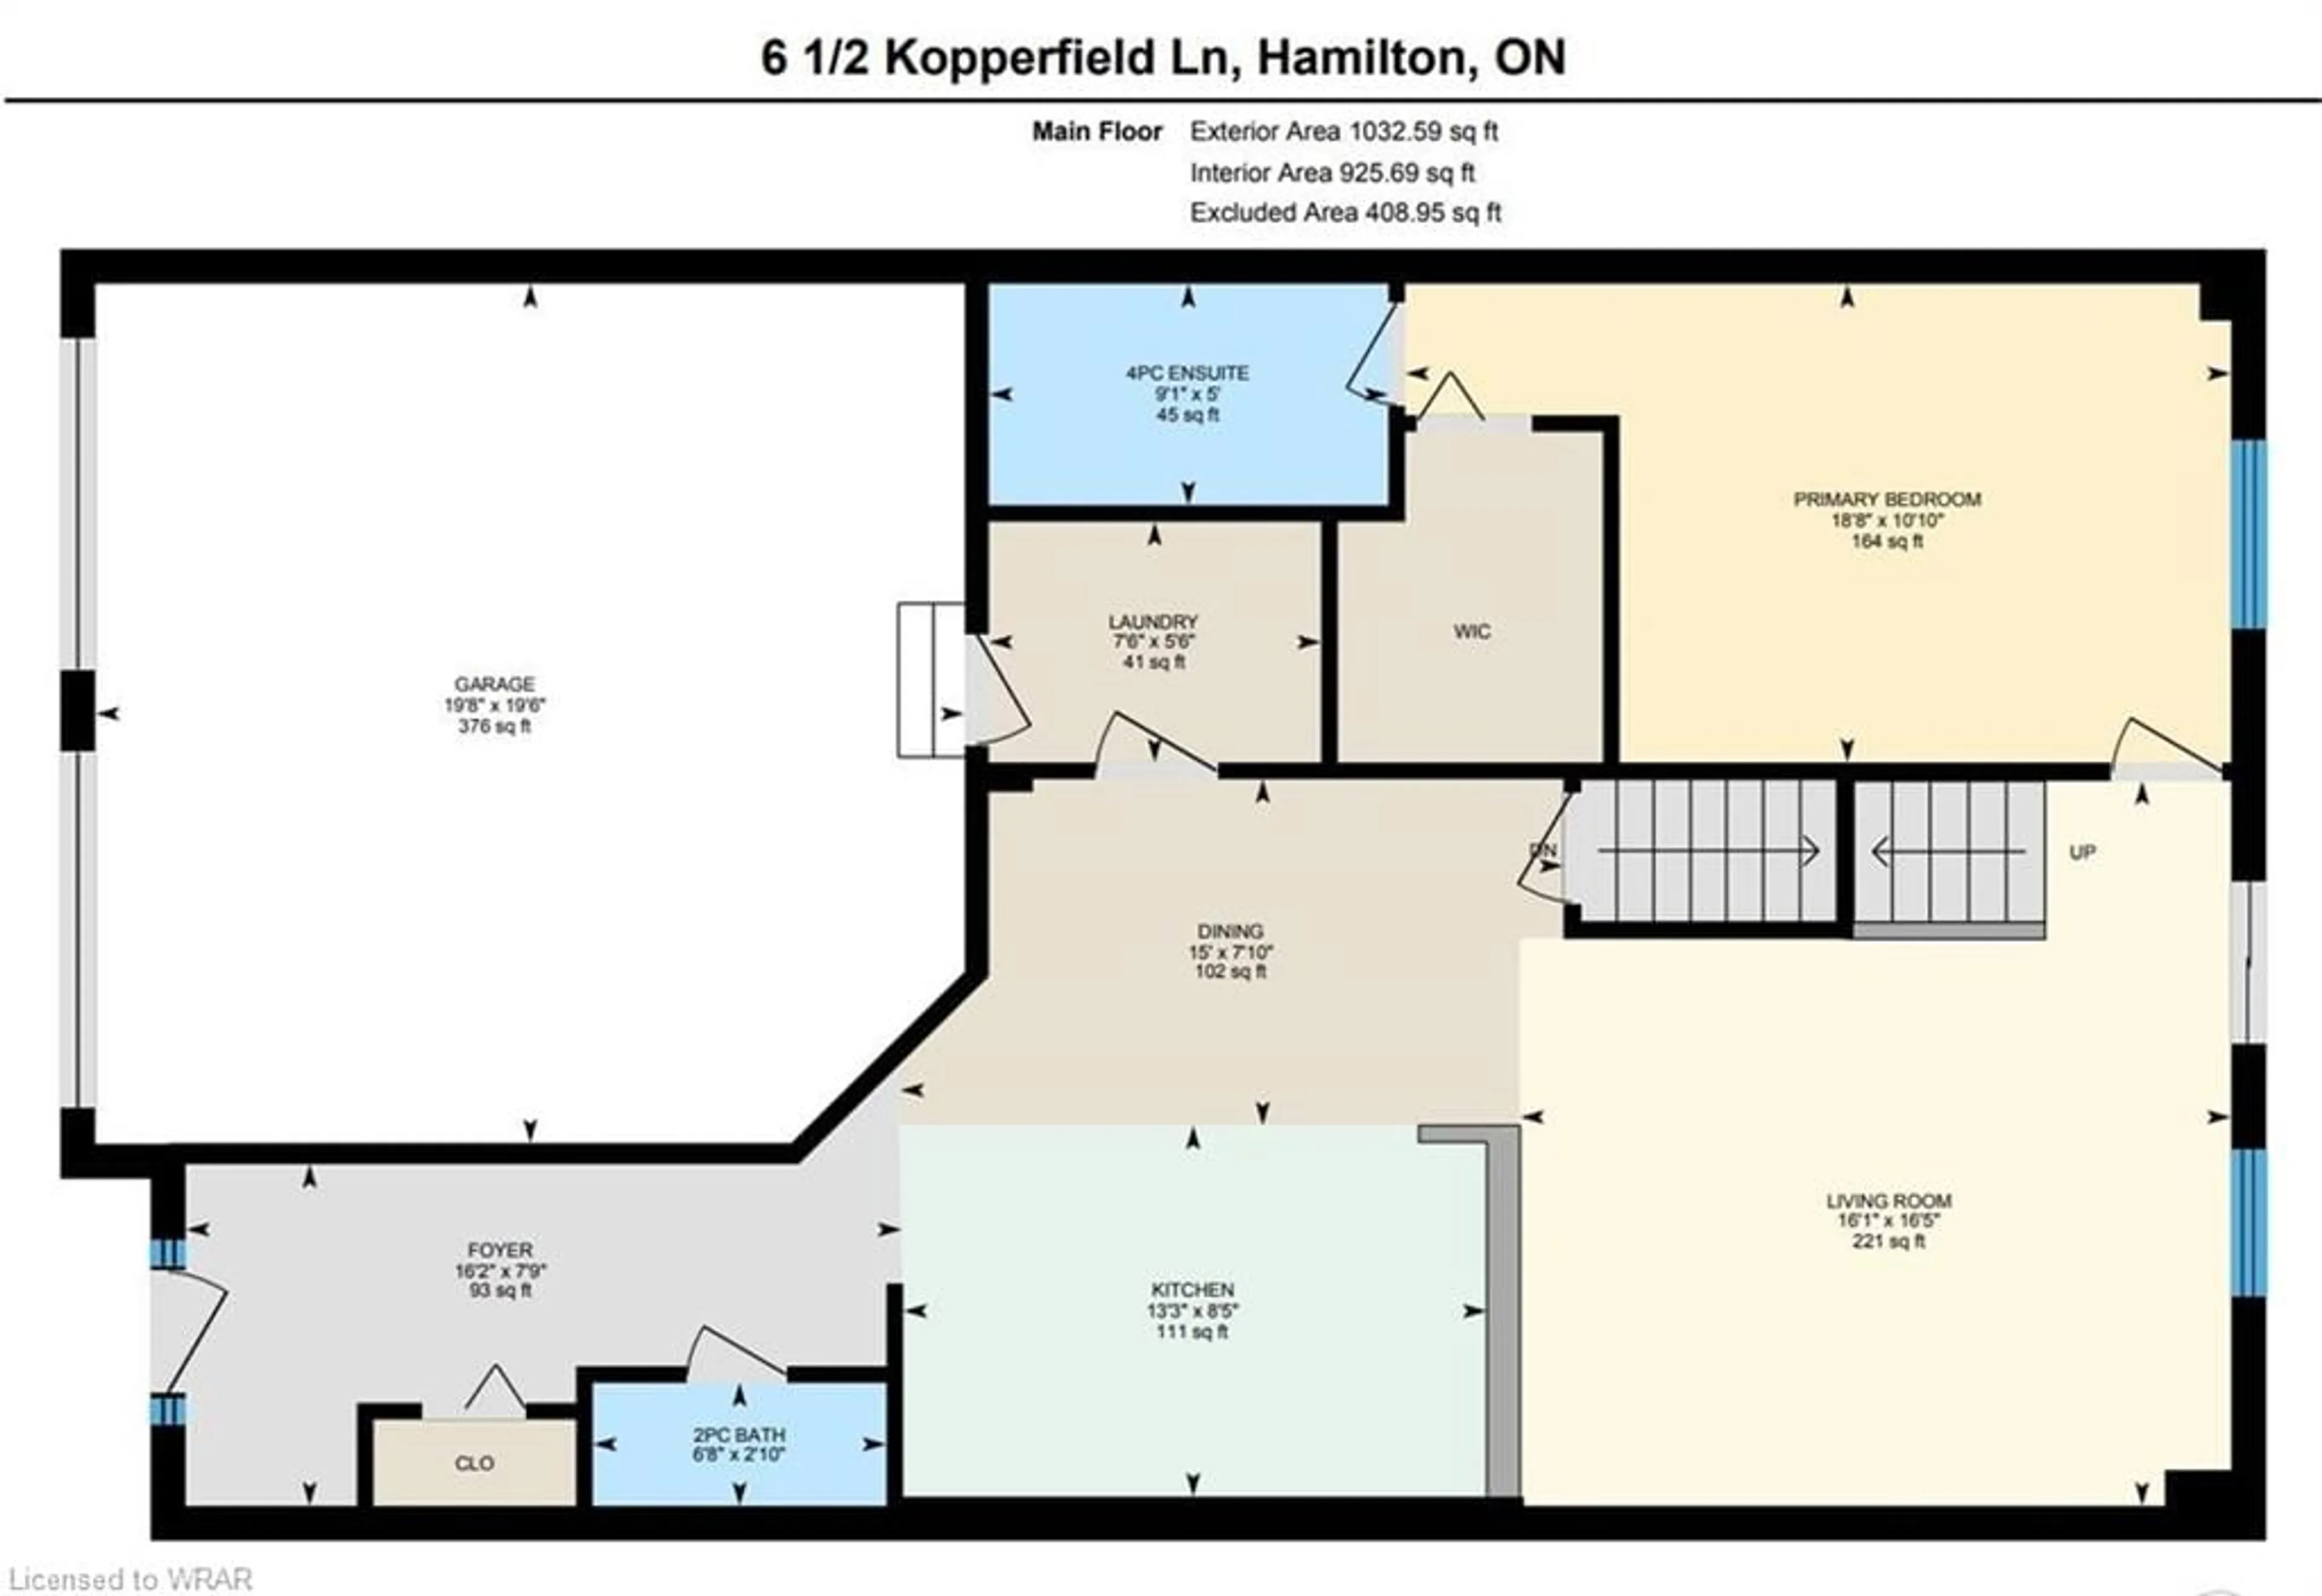 Floor plan for 6 1/2 Kopperfield Lane, Hamilton Ontario L0R 1W0